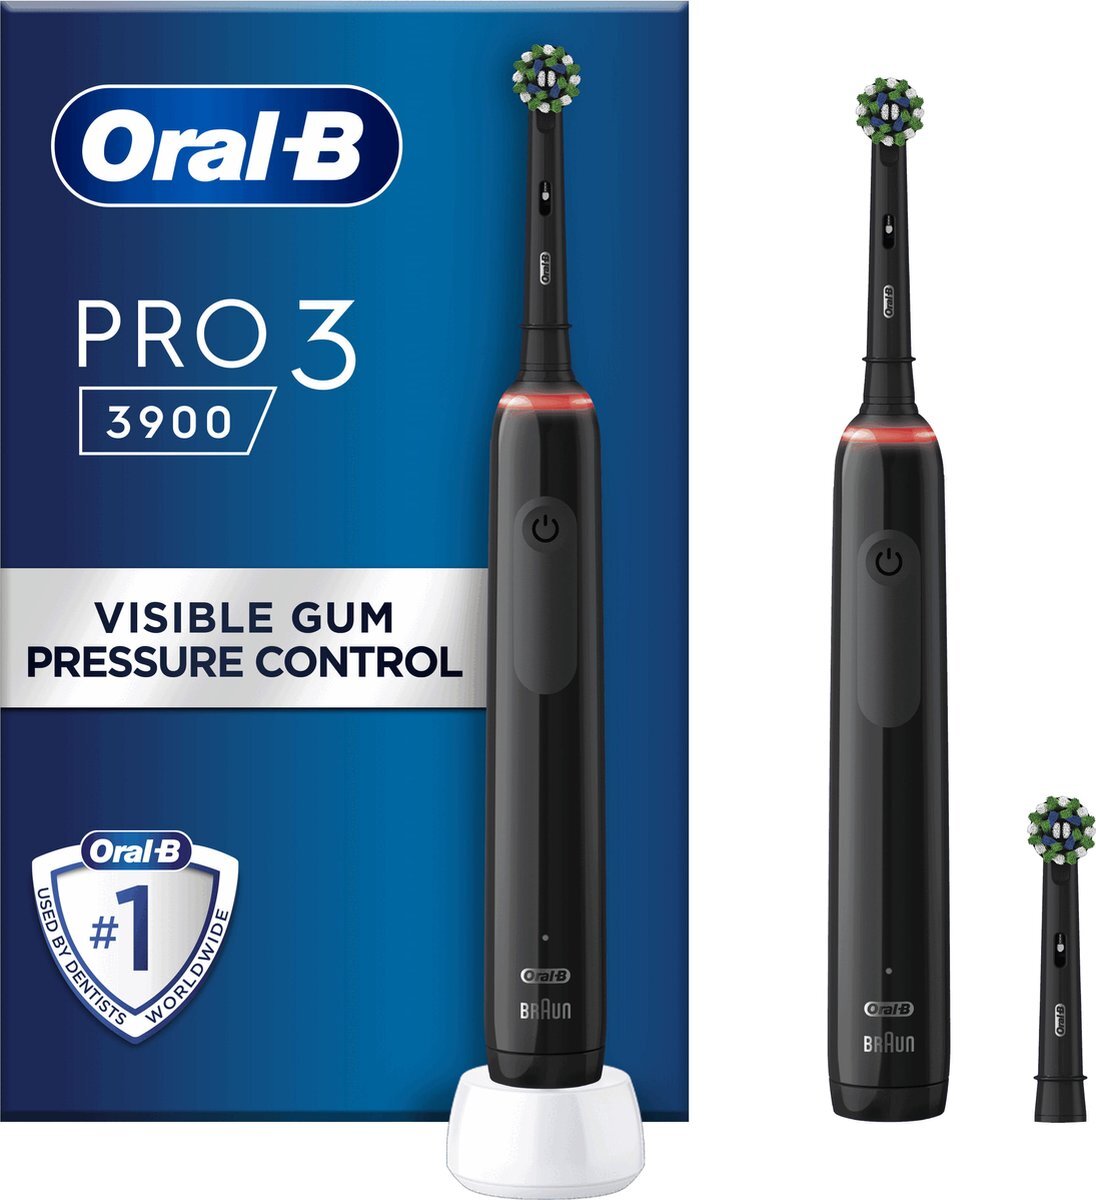 Oral-B Oral-B Pro 3 3900 Duo zwart / duo pack